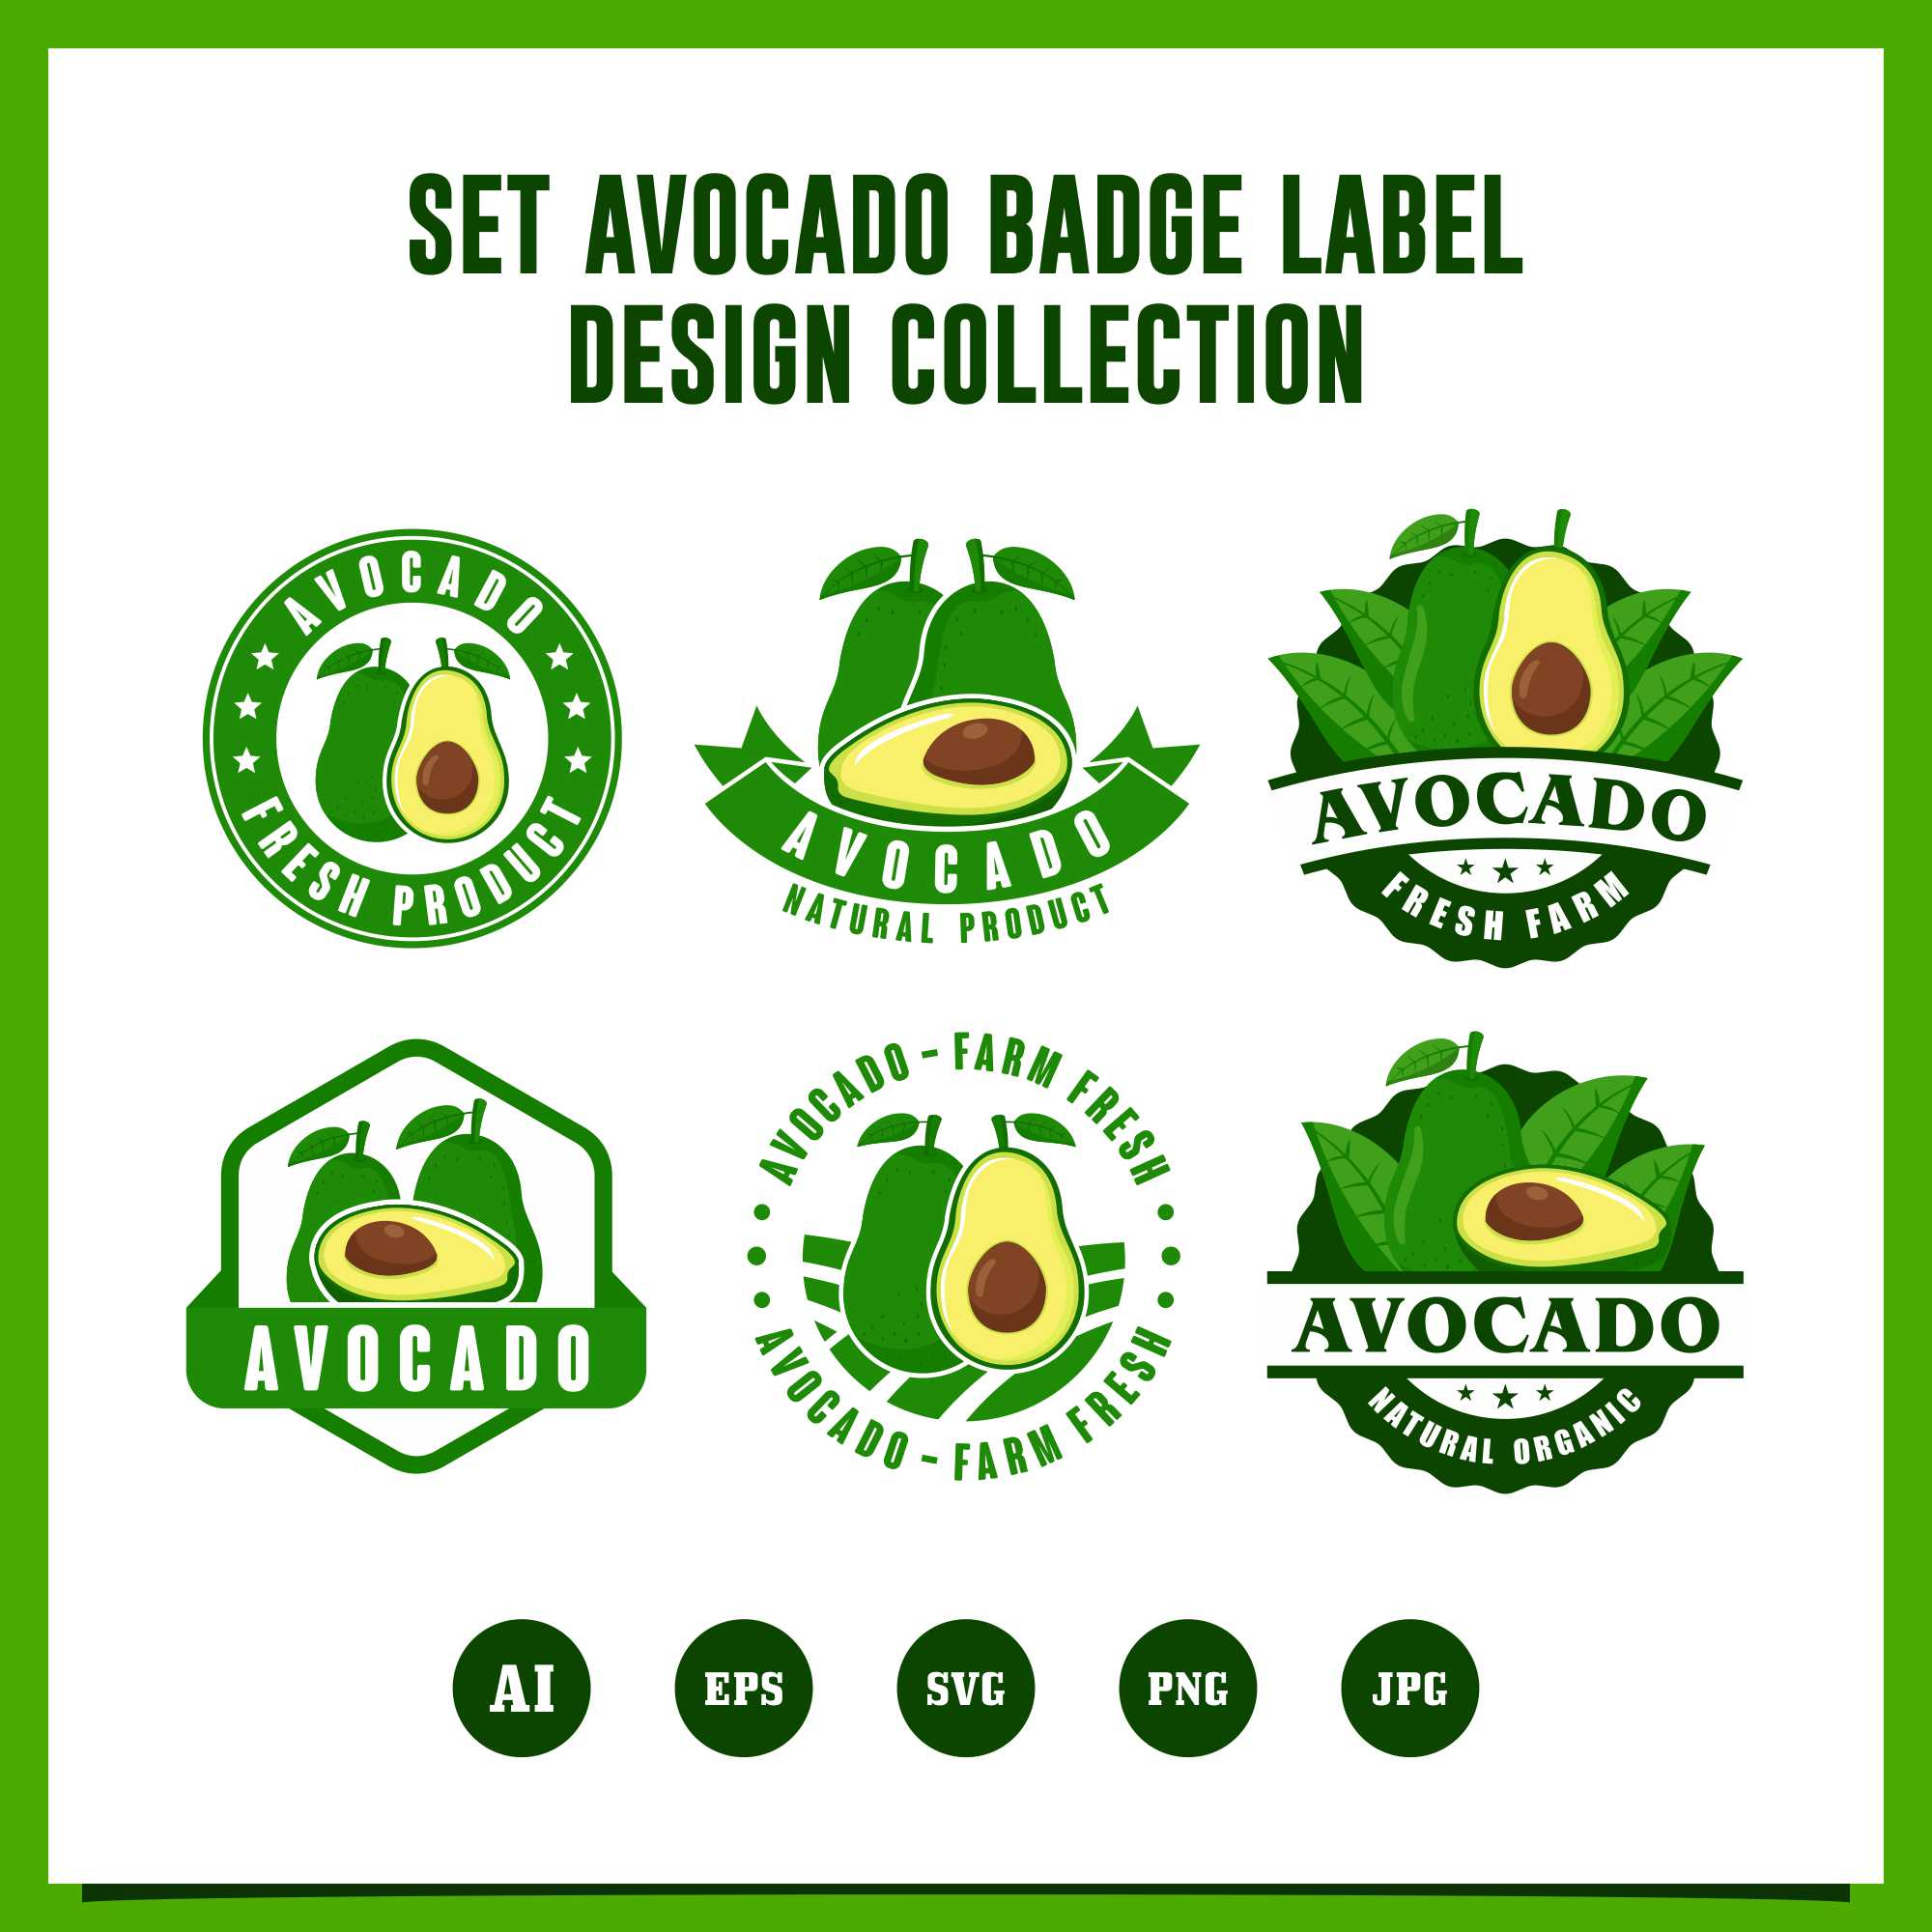 Set Avocado badge label design collection - $6 cover image.